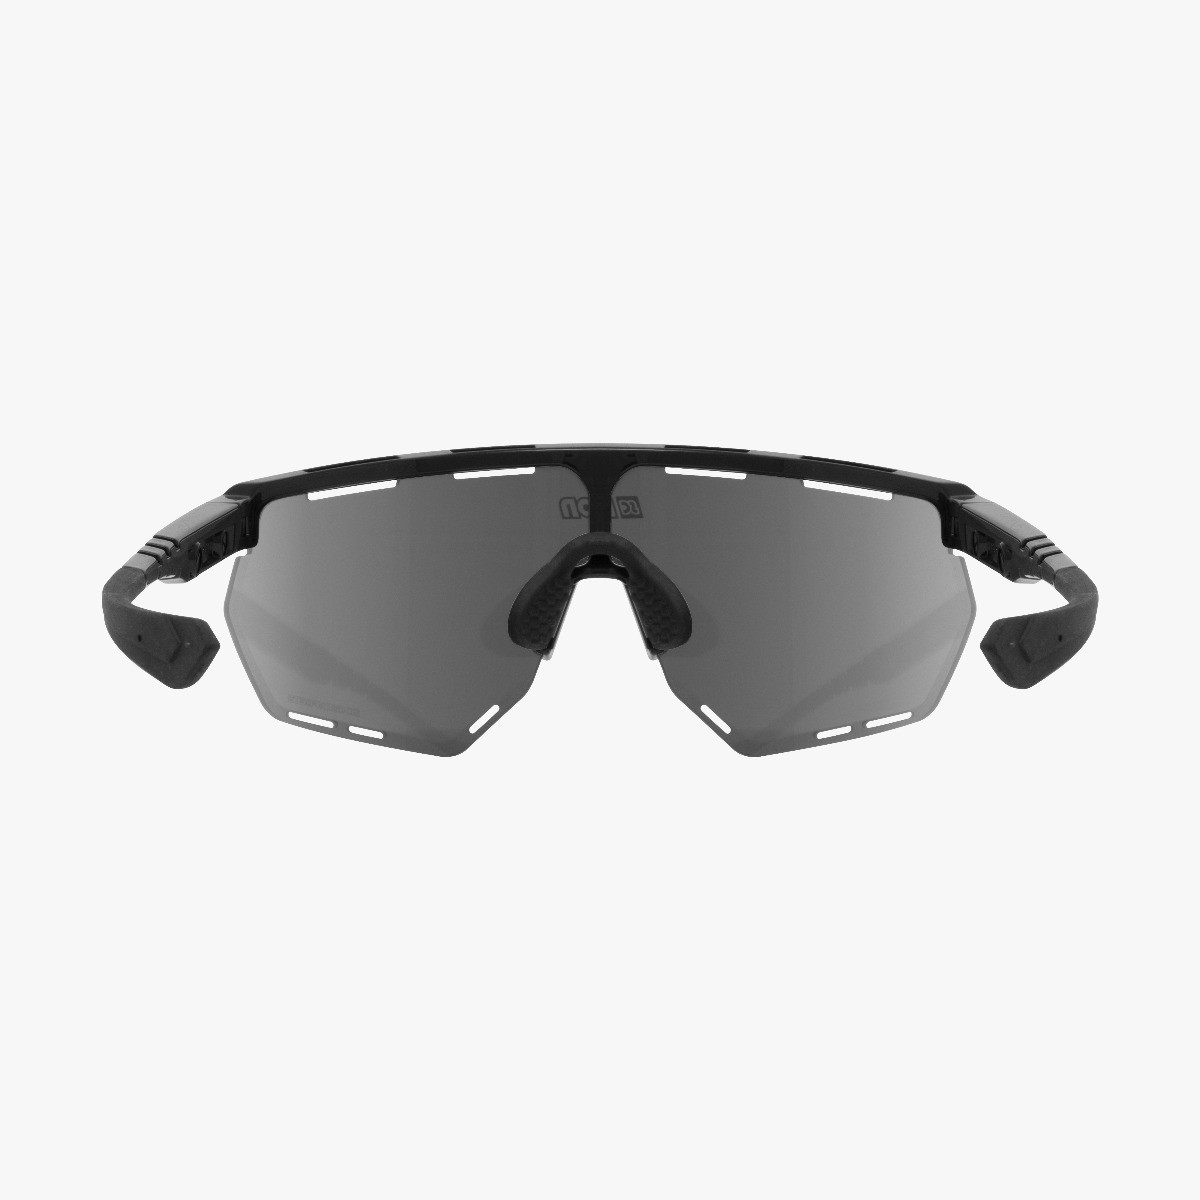 Scicon Sports | Aerowing Sport Performance Sunglasses - Black Gloss / Multimirror Bronze - EY26070201